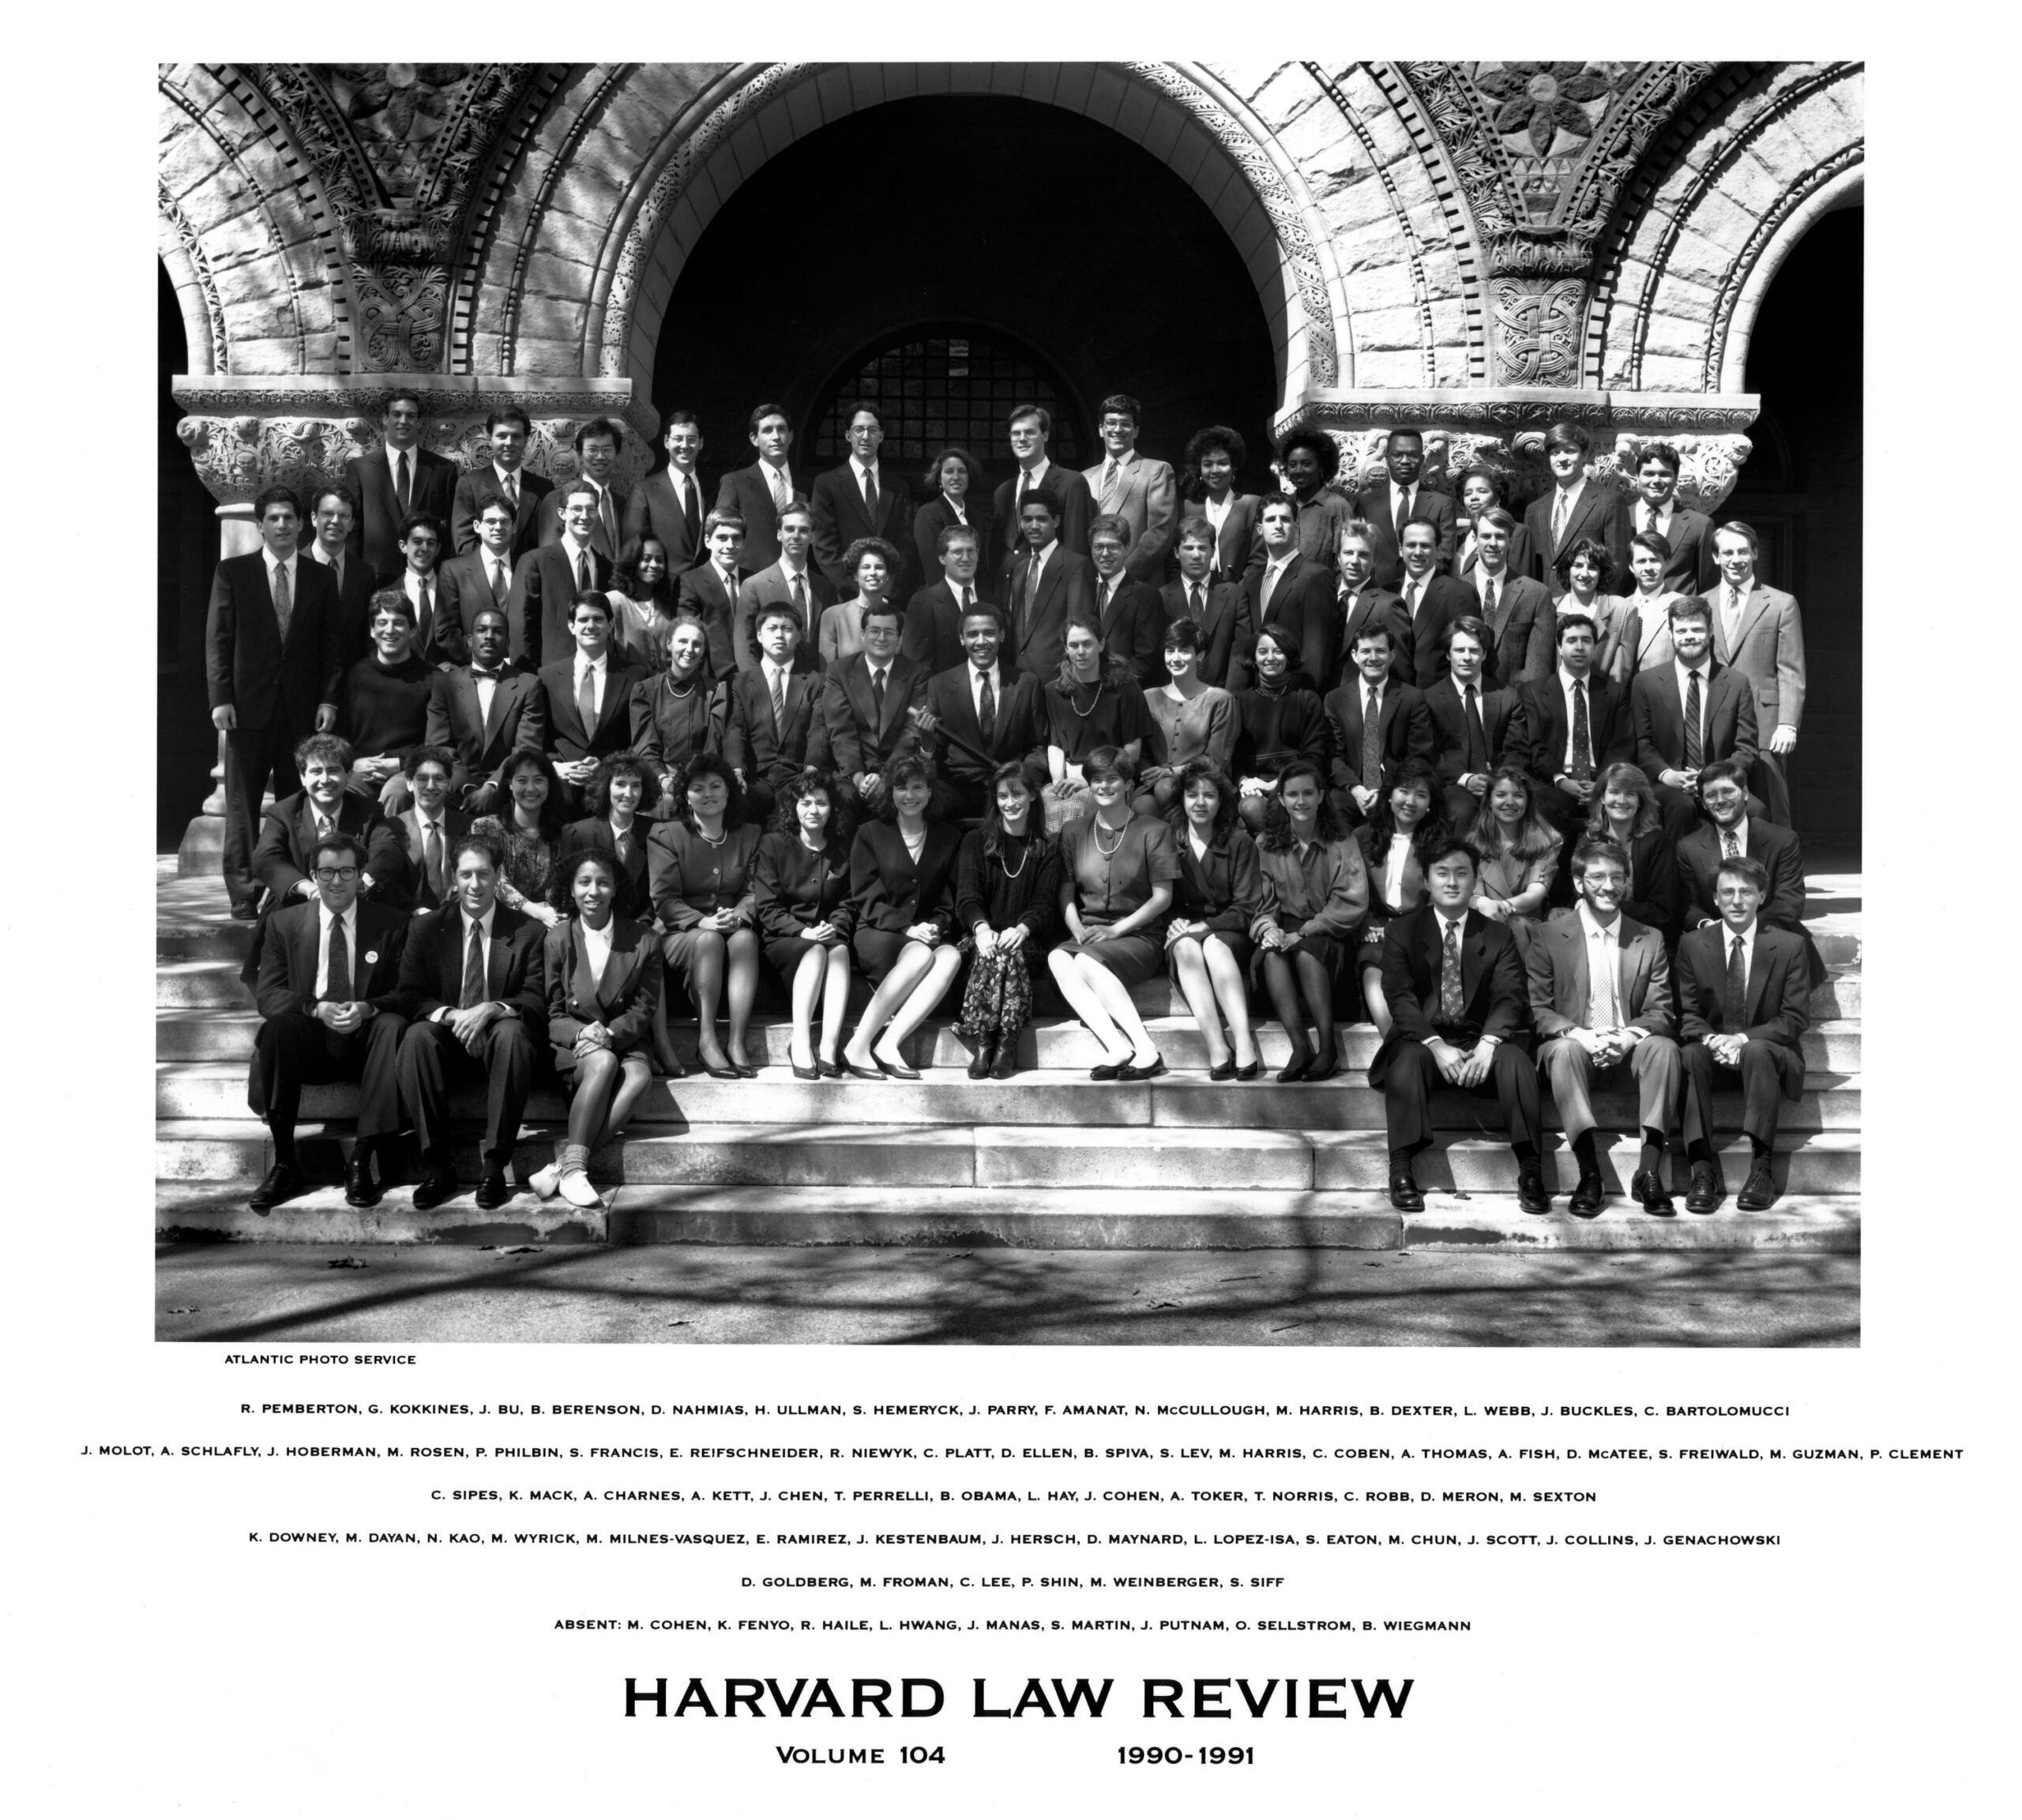 Vintage photo of people posing on steps, Harvard Law Review, 1990-1991